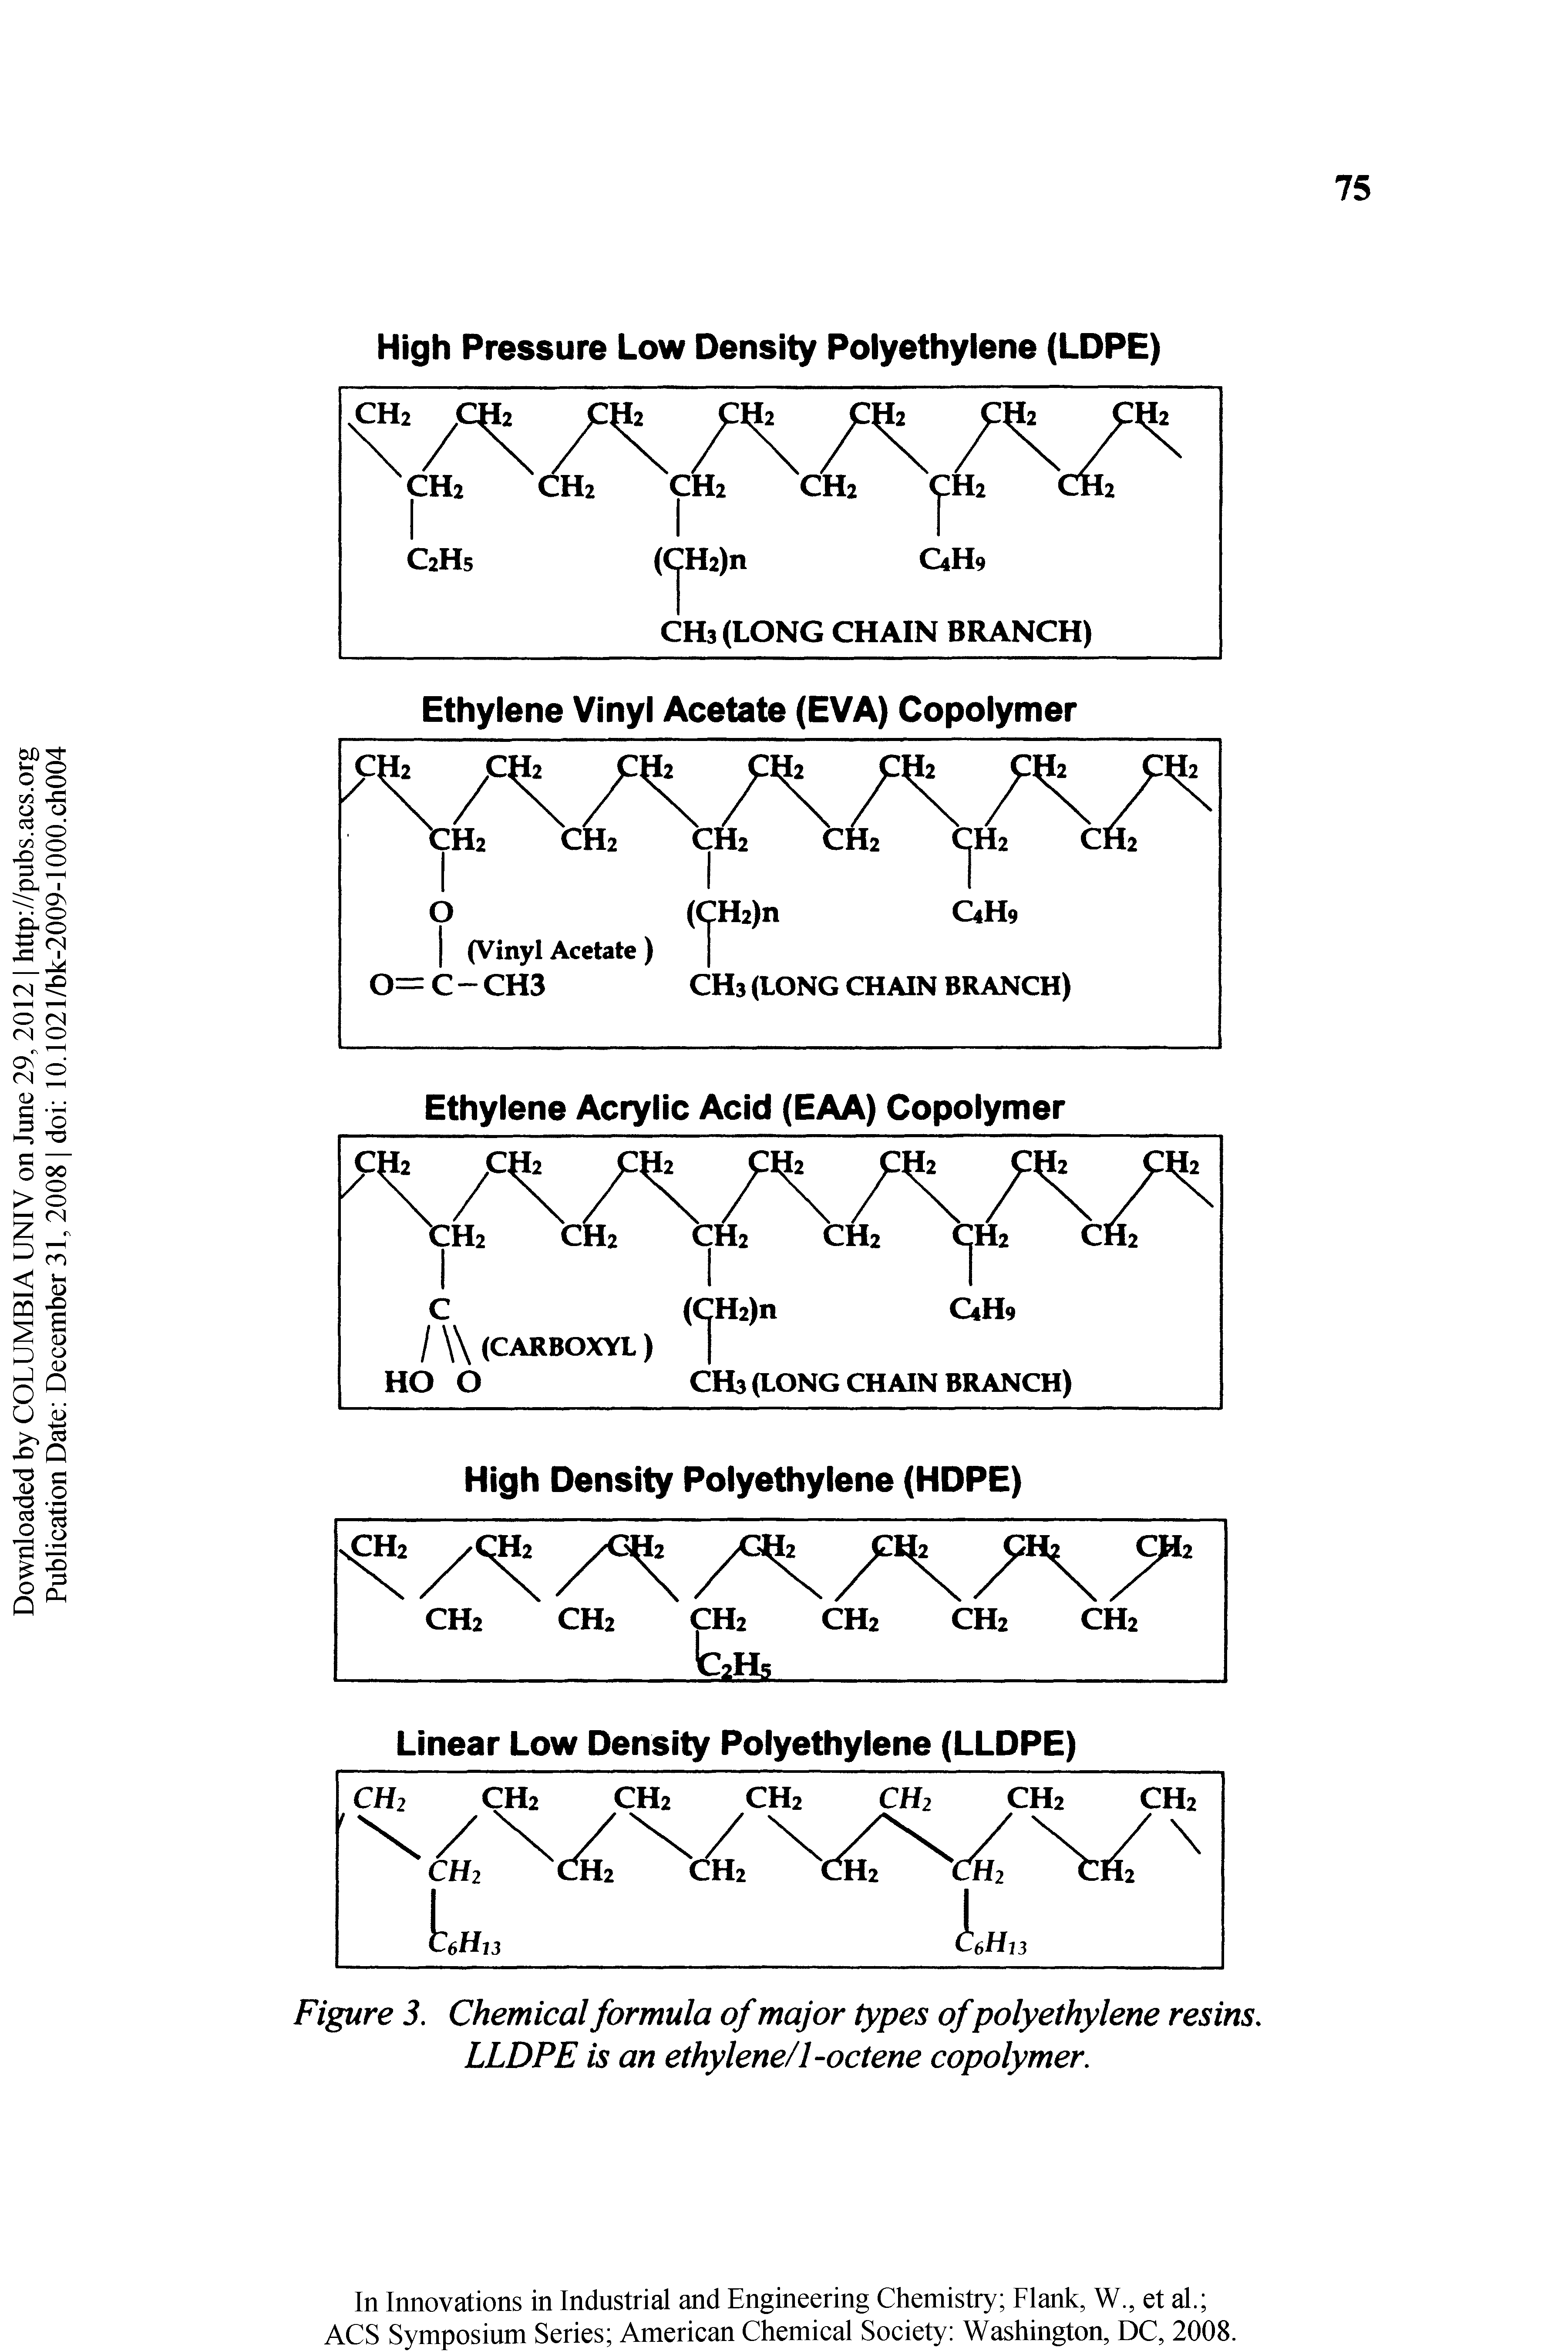 Figure 3. Chemical formula of major types ofpolyethylene resins, LLDPE is an ethylene/1-octene copolymer.